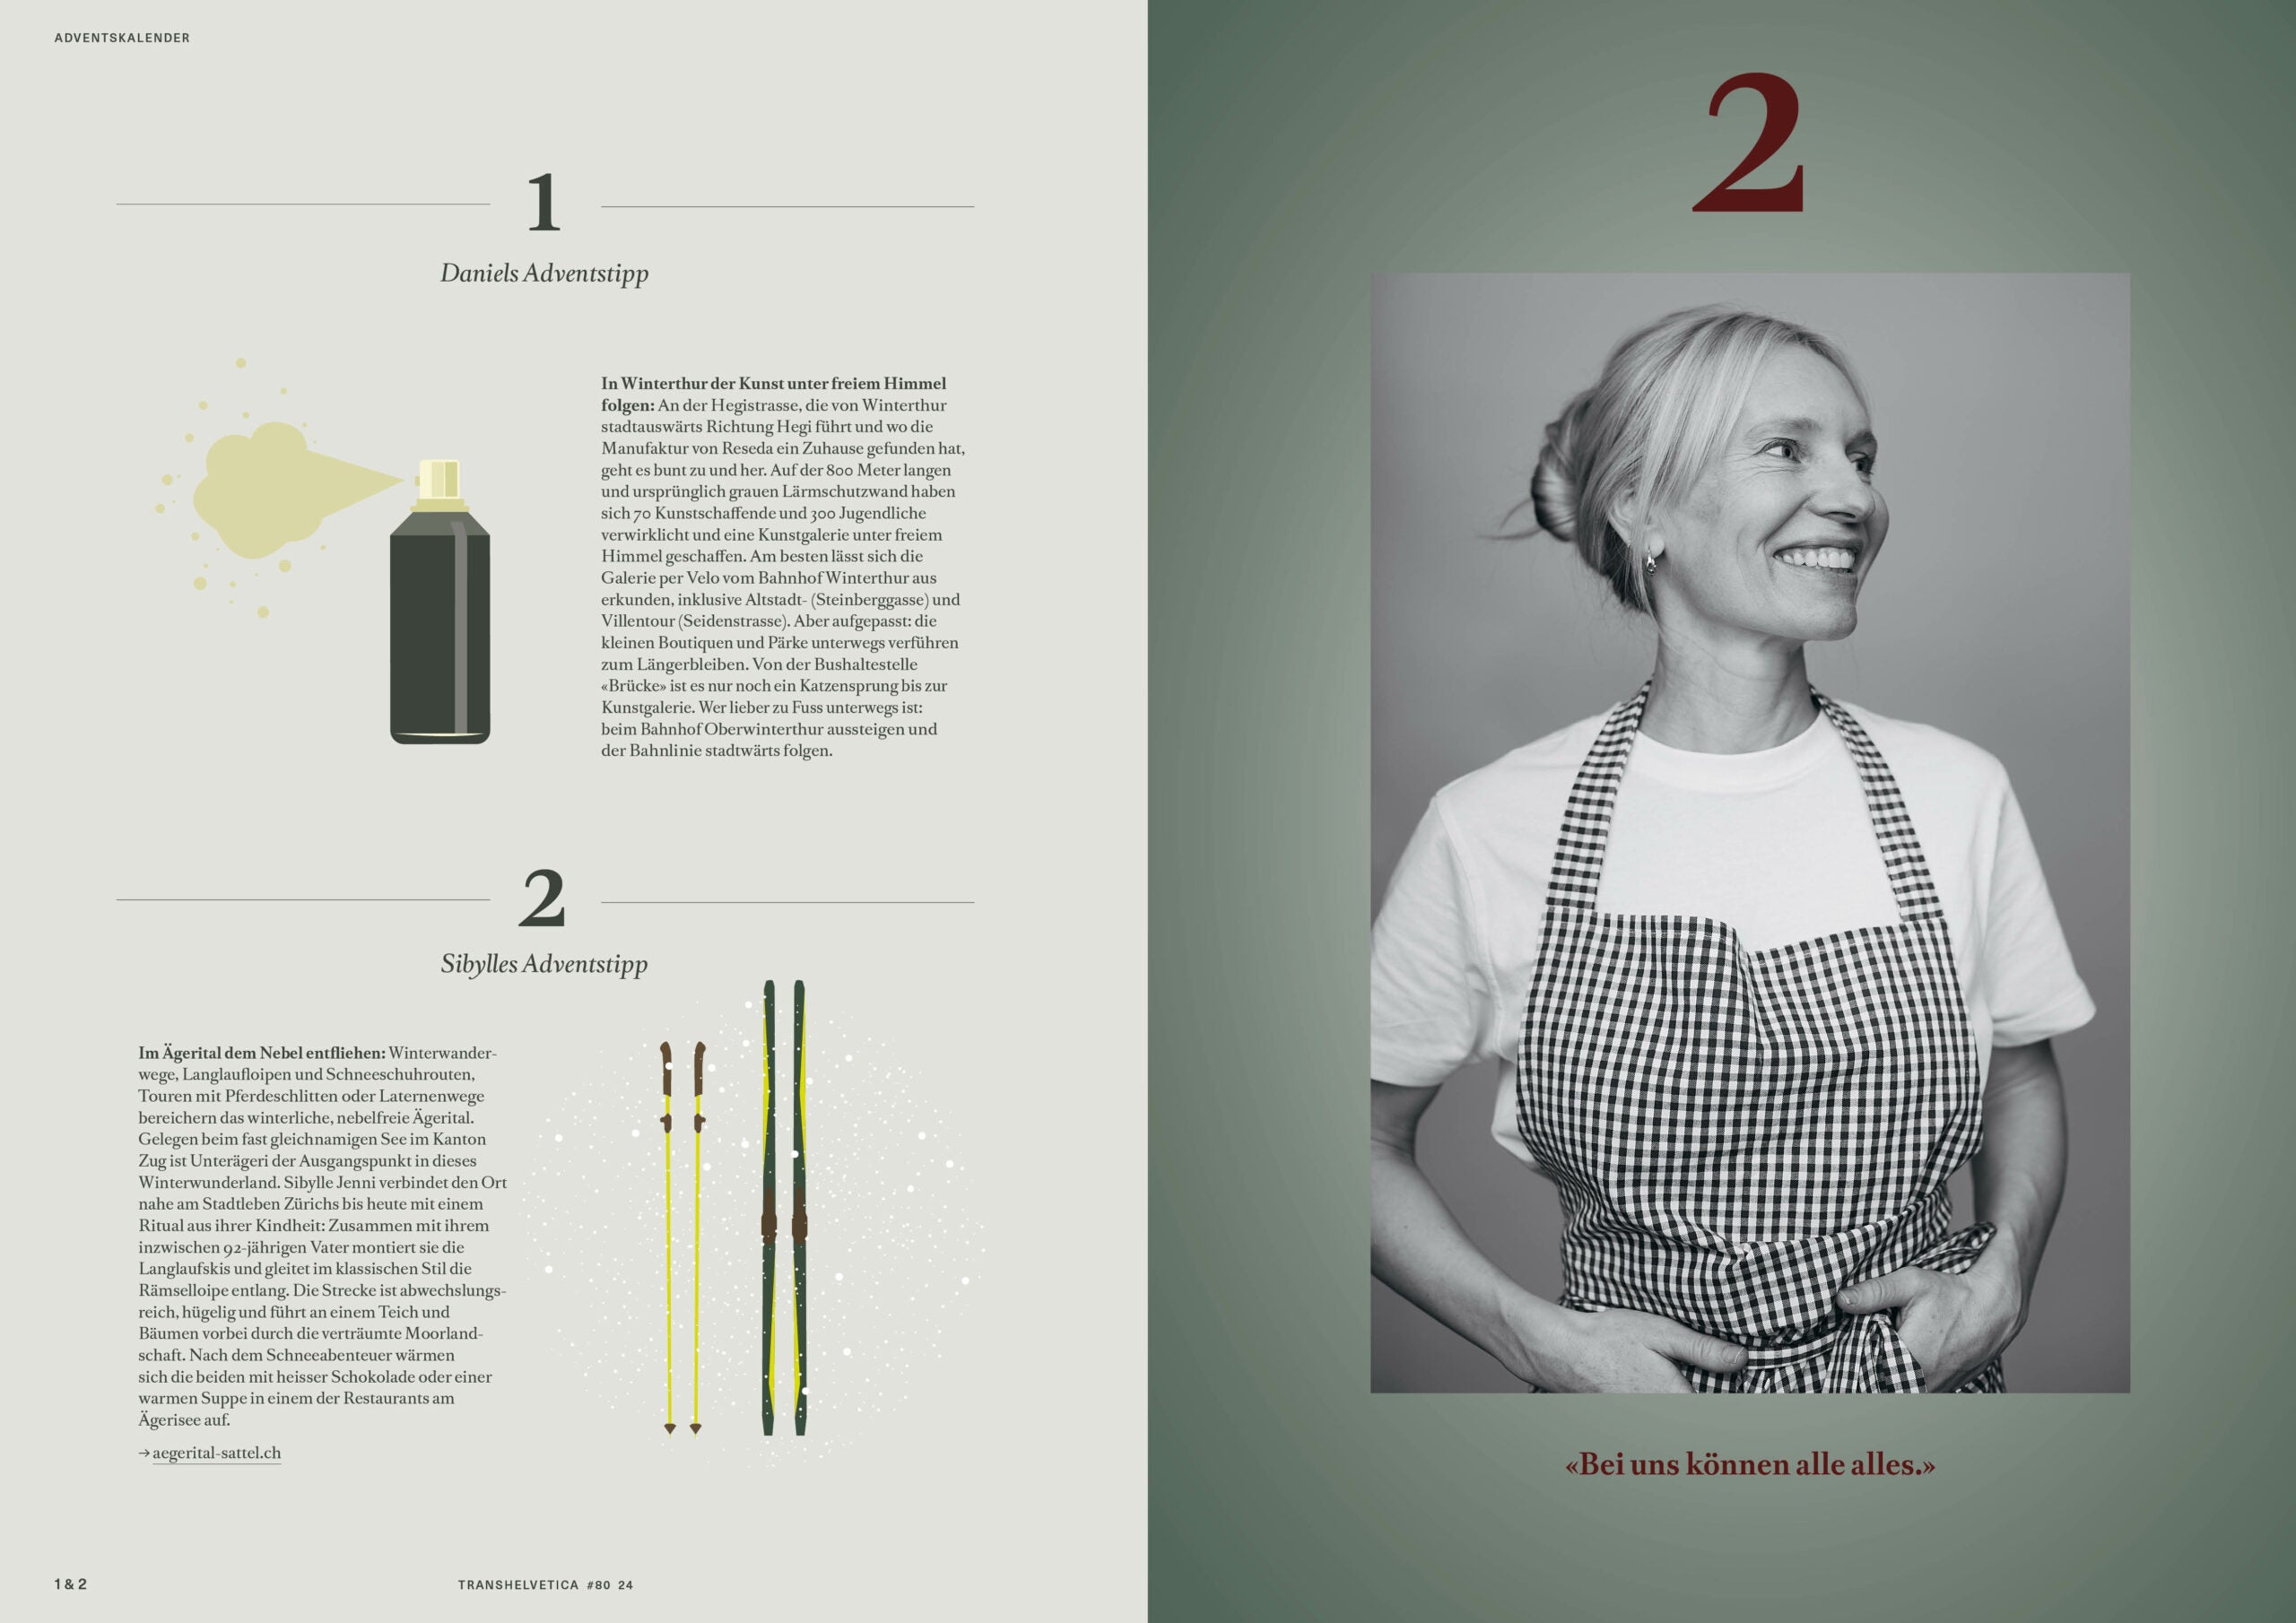 LABEL17 presents Transhelvetica Magazin Issue 80, dedicated to the Adventskaleder